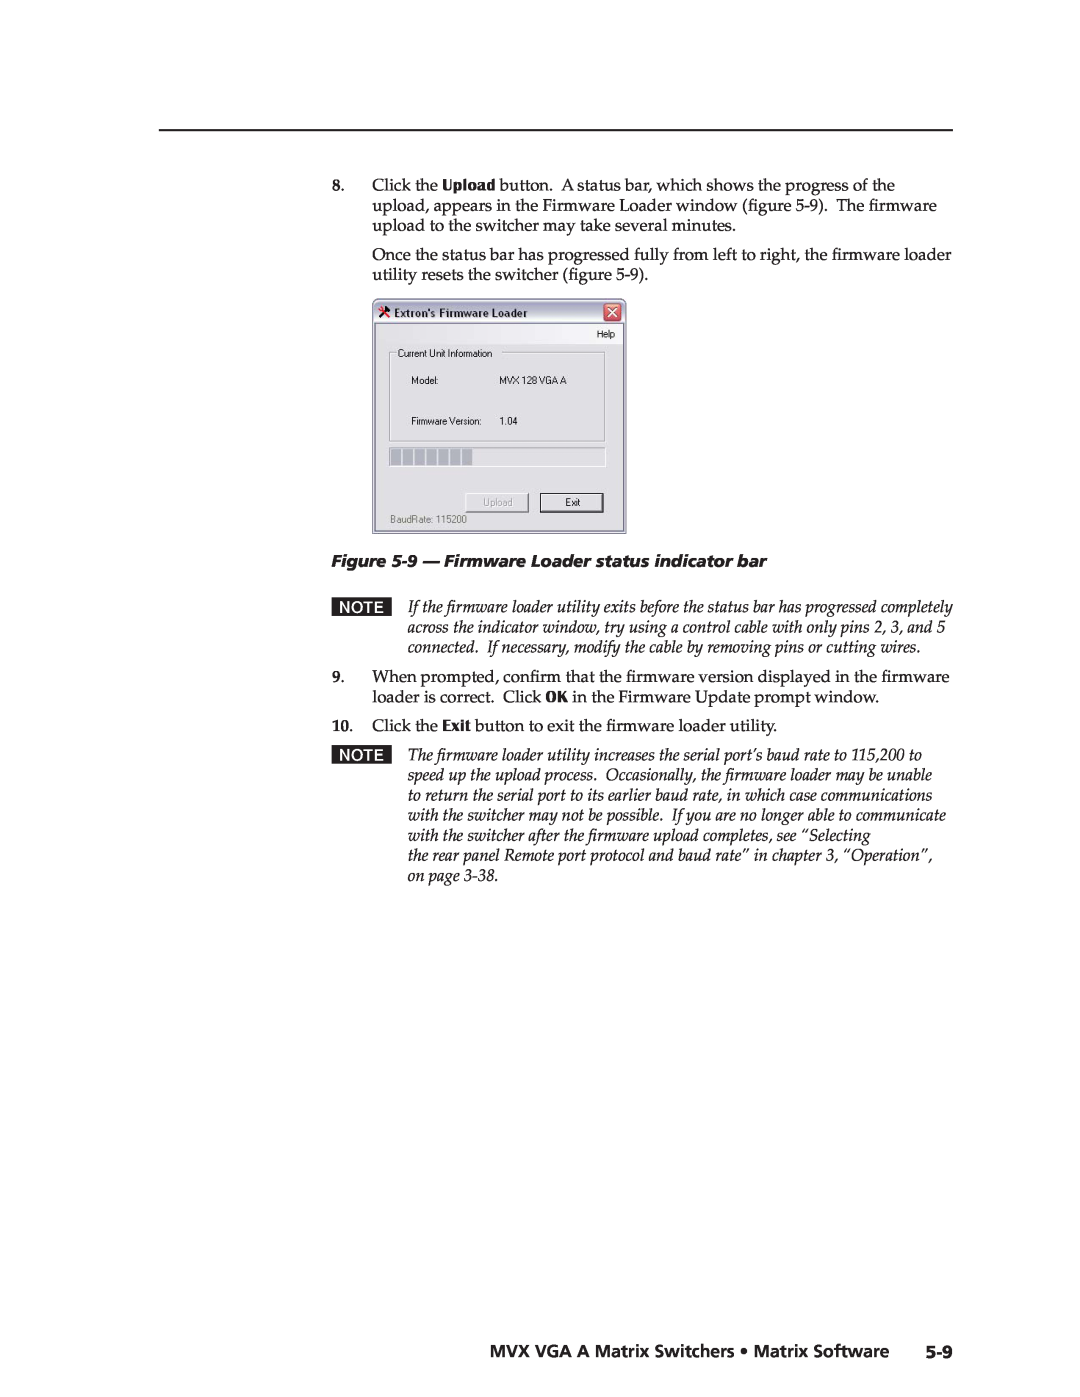 Extron electronic MVX VGA A manual 9 - Firmware Loader status indicator bar, Preliminary 